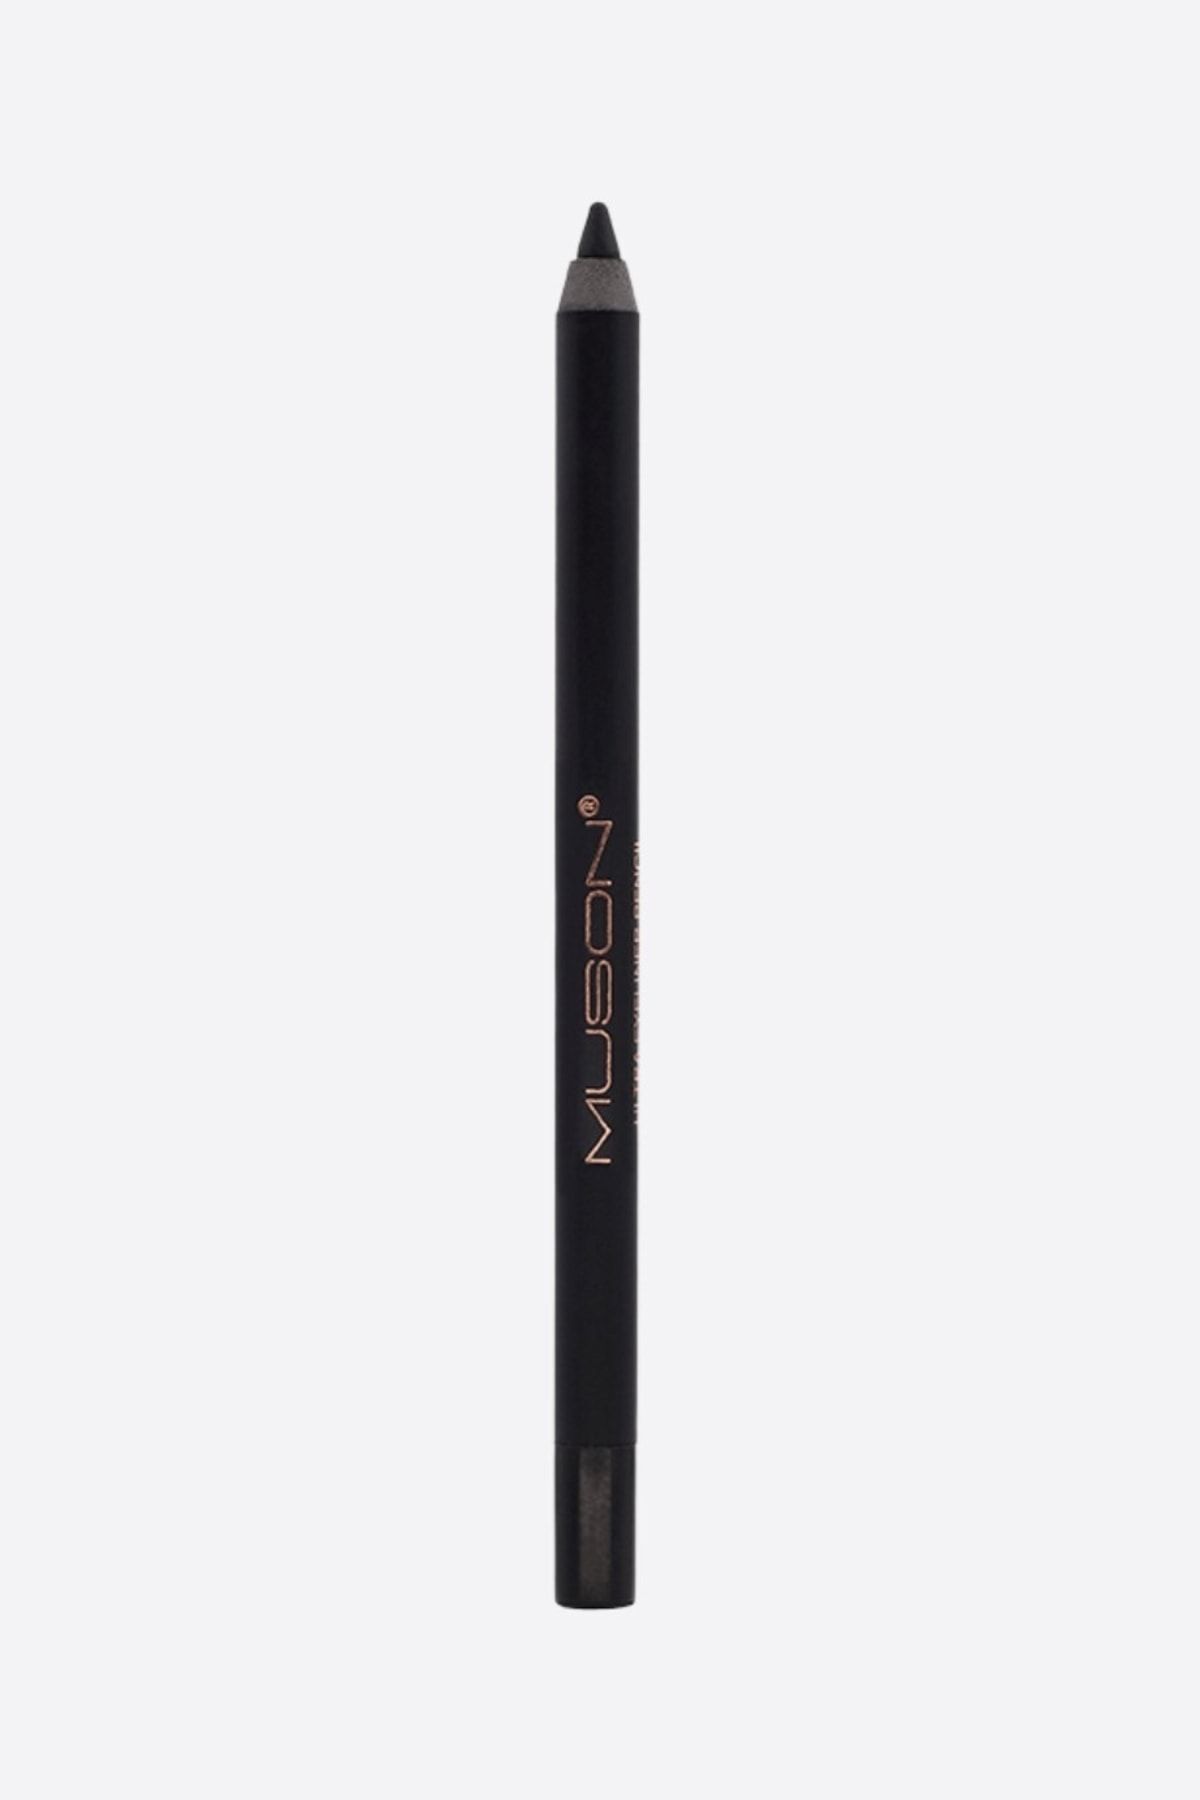 Muson 101 Black Kohl Effect Ultra Eyeliner Pencil